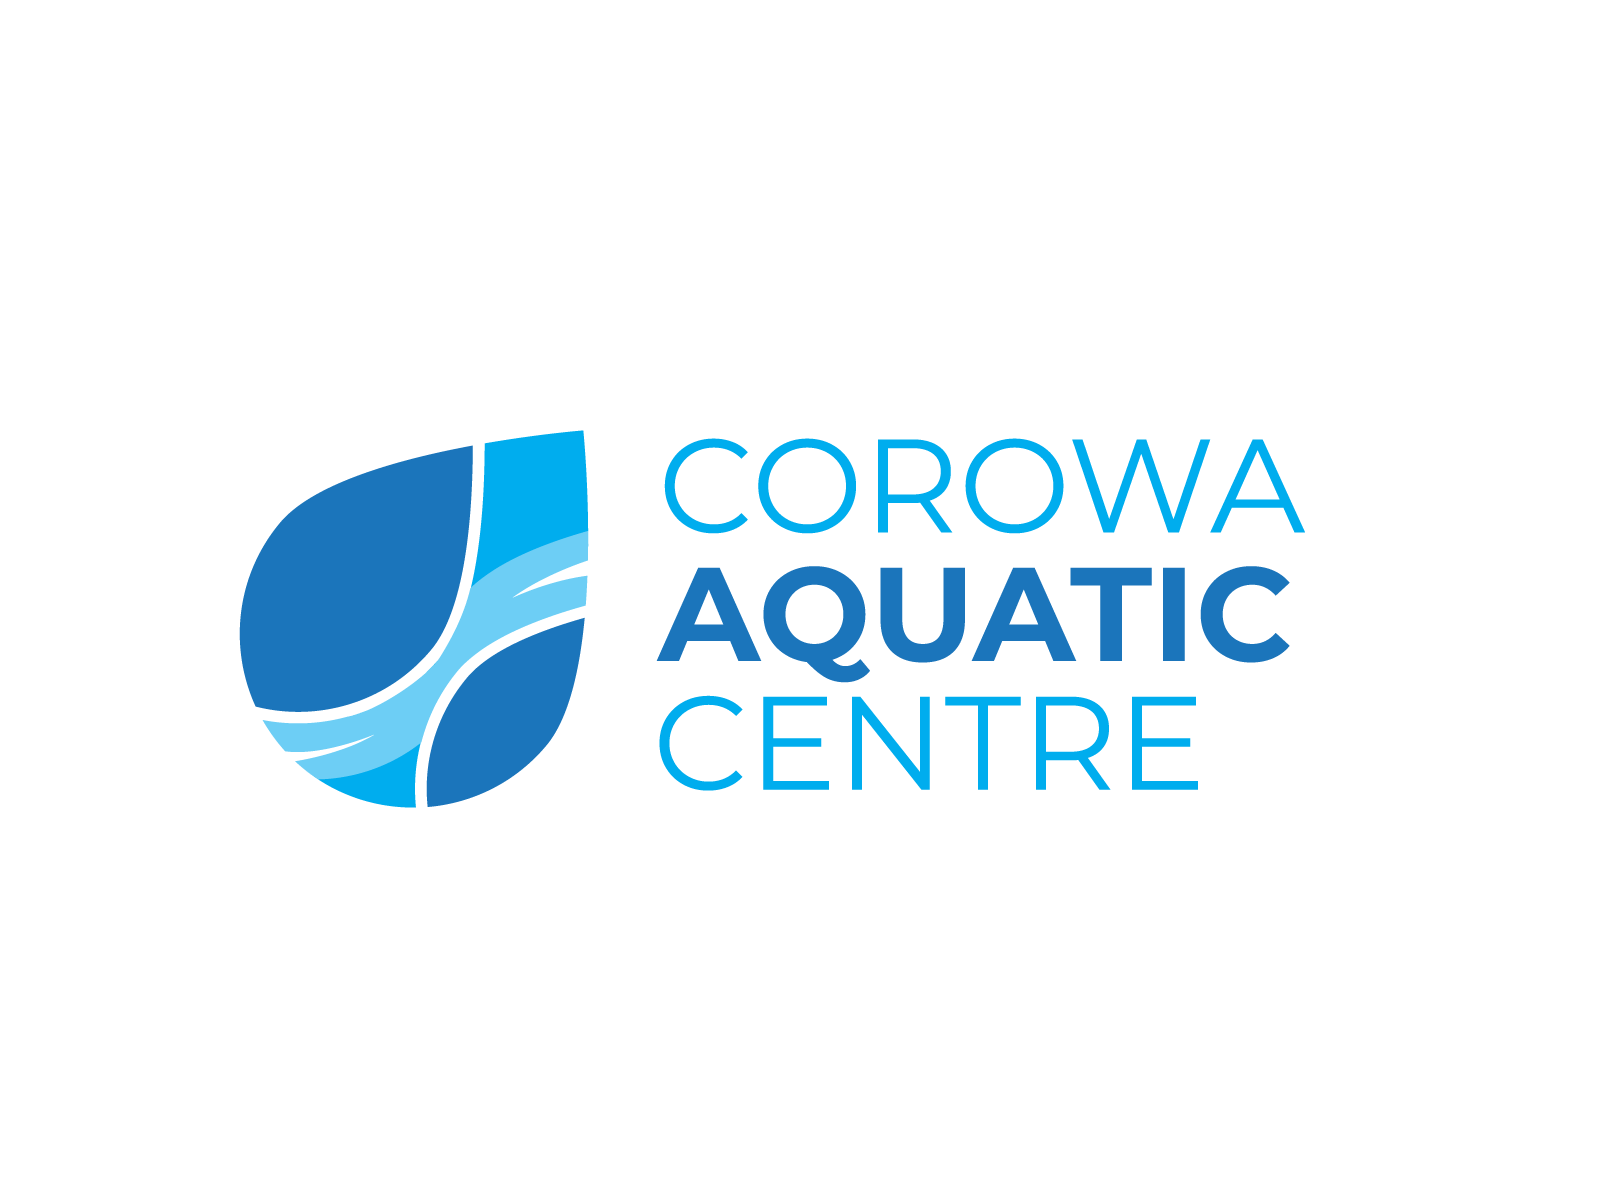 Corowa Aquatic Centre Logo Design